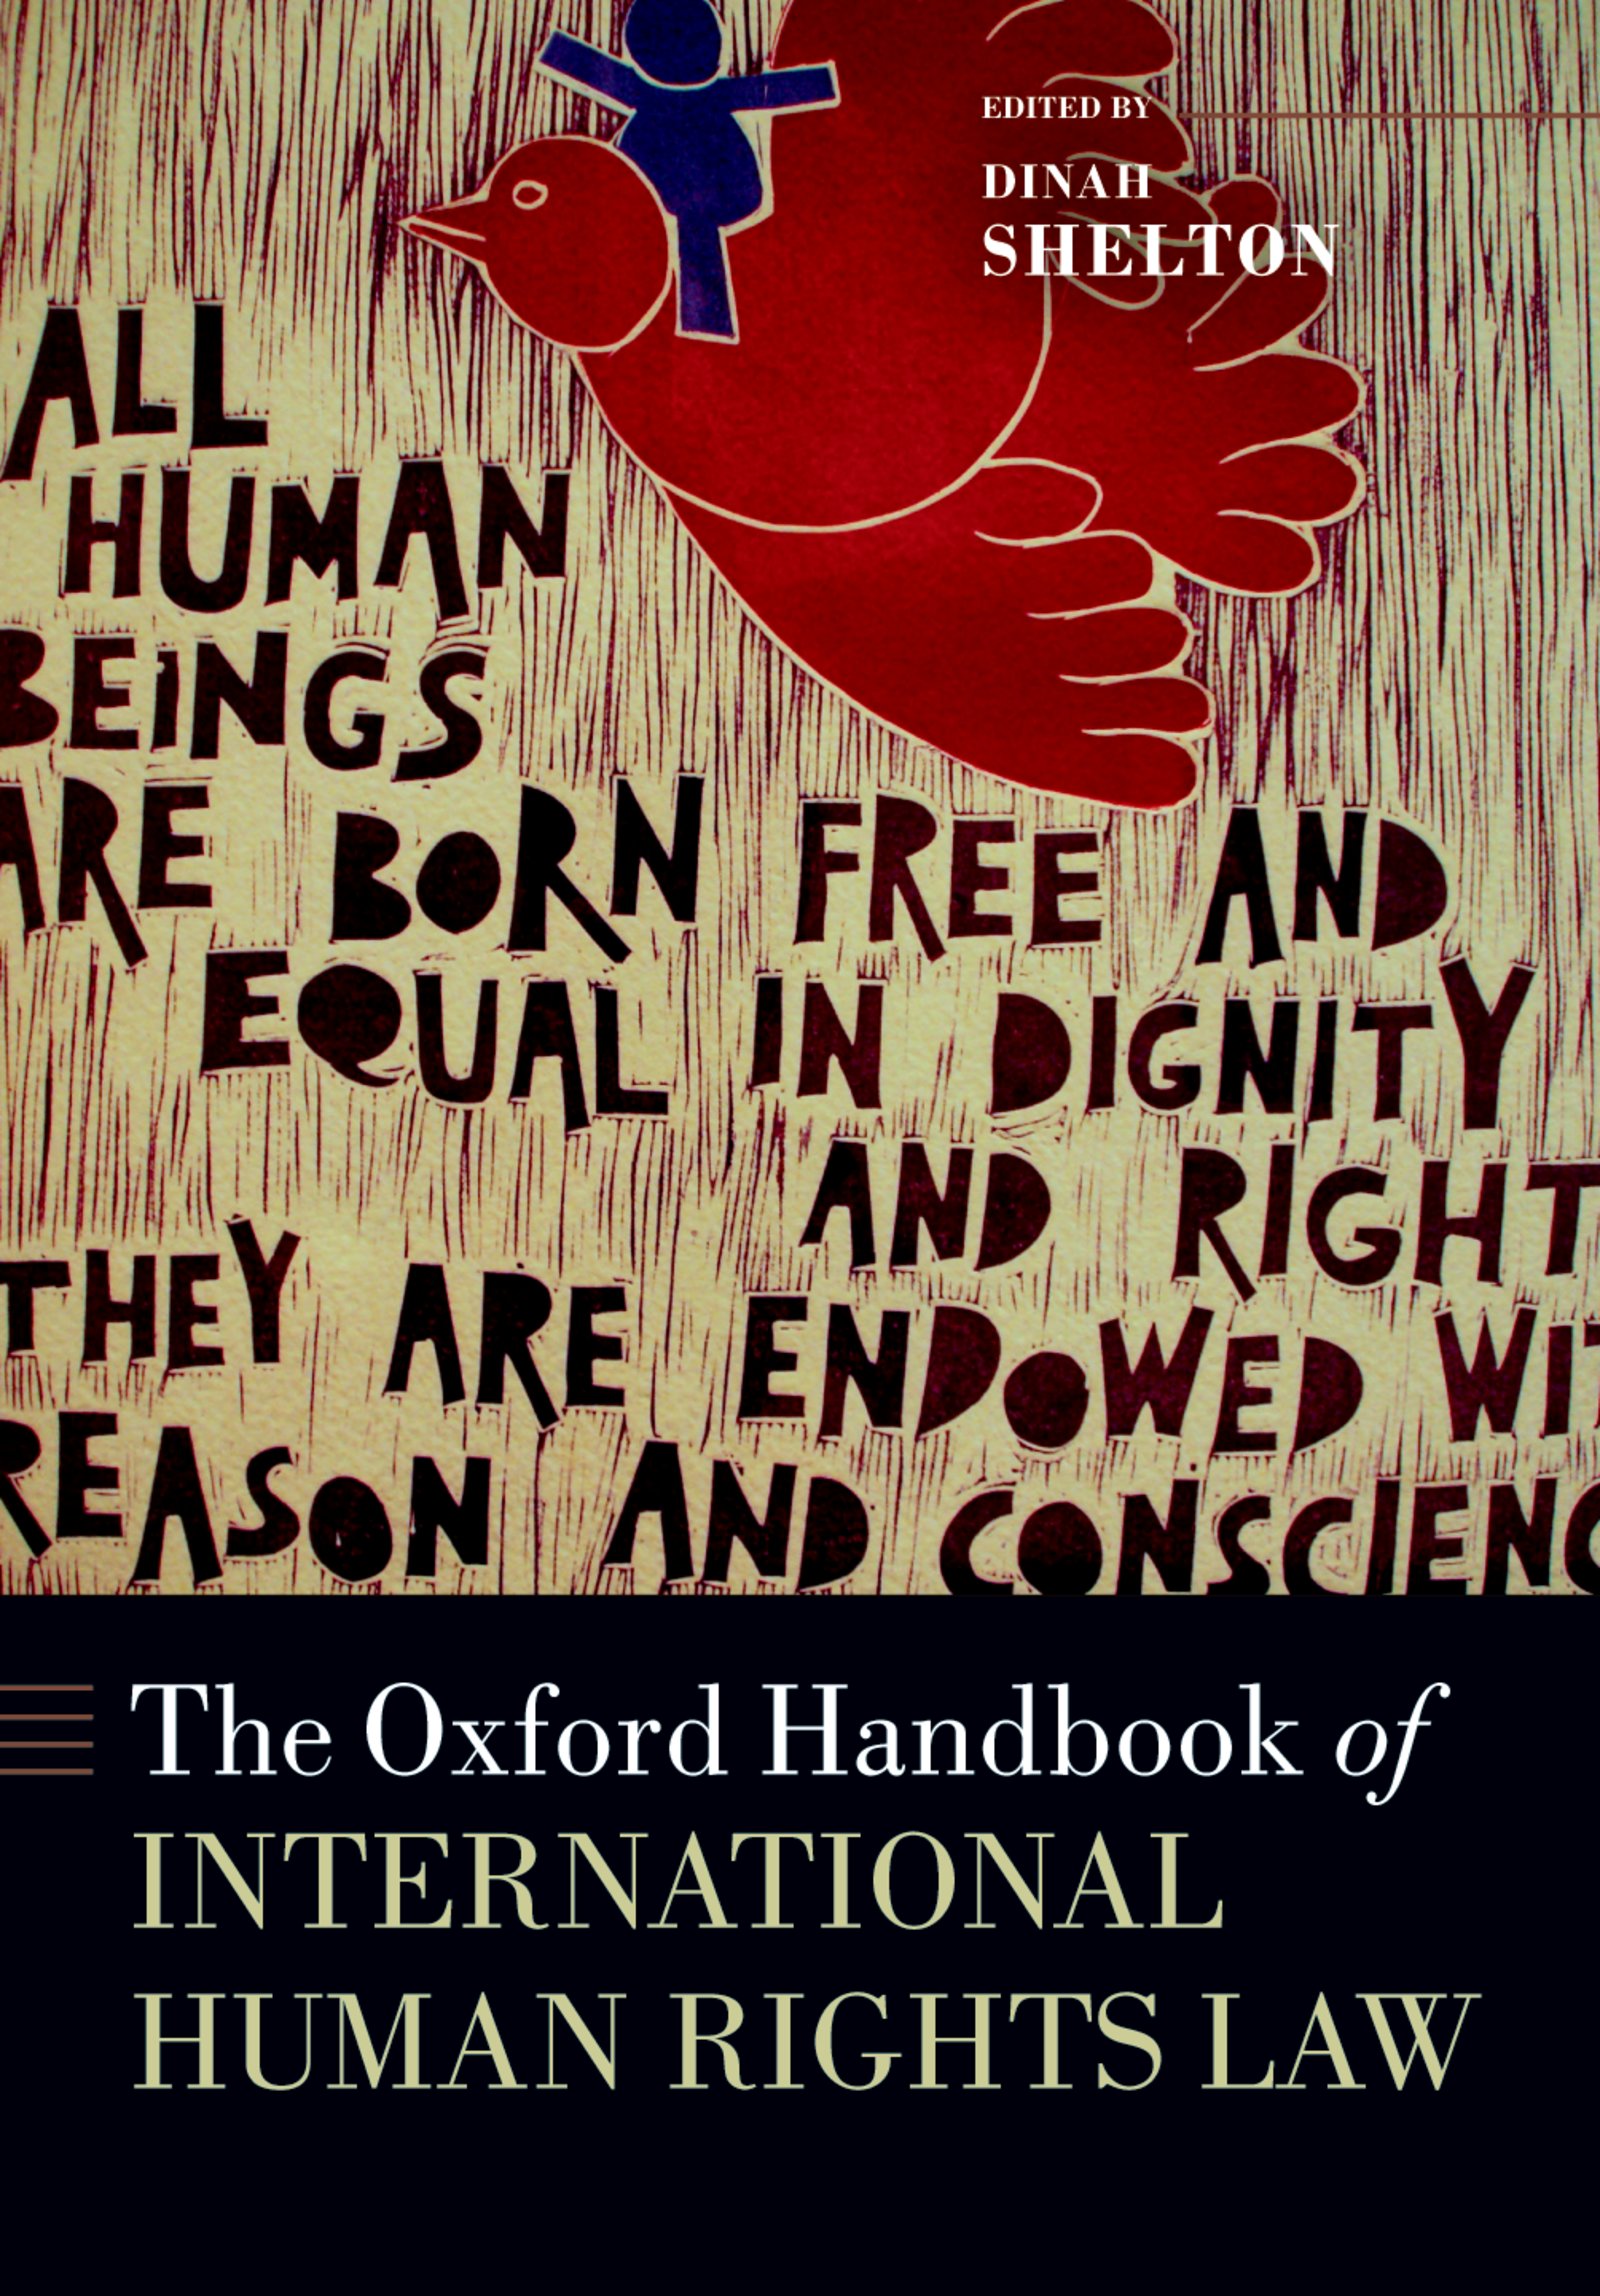 The Oxford Handbook of International Human Rights Law - 50-99.99